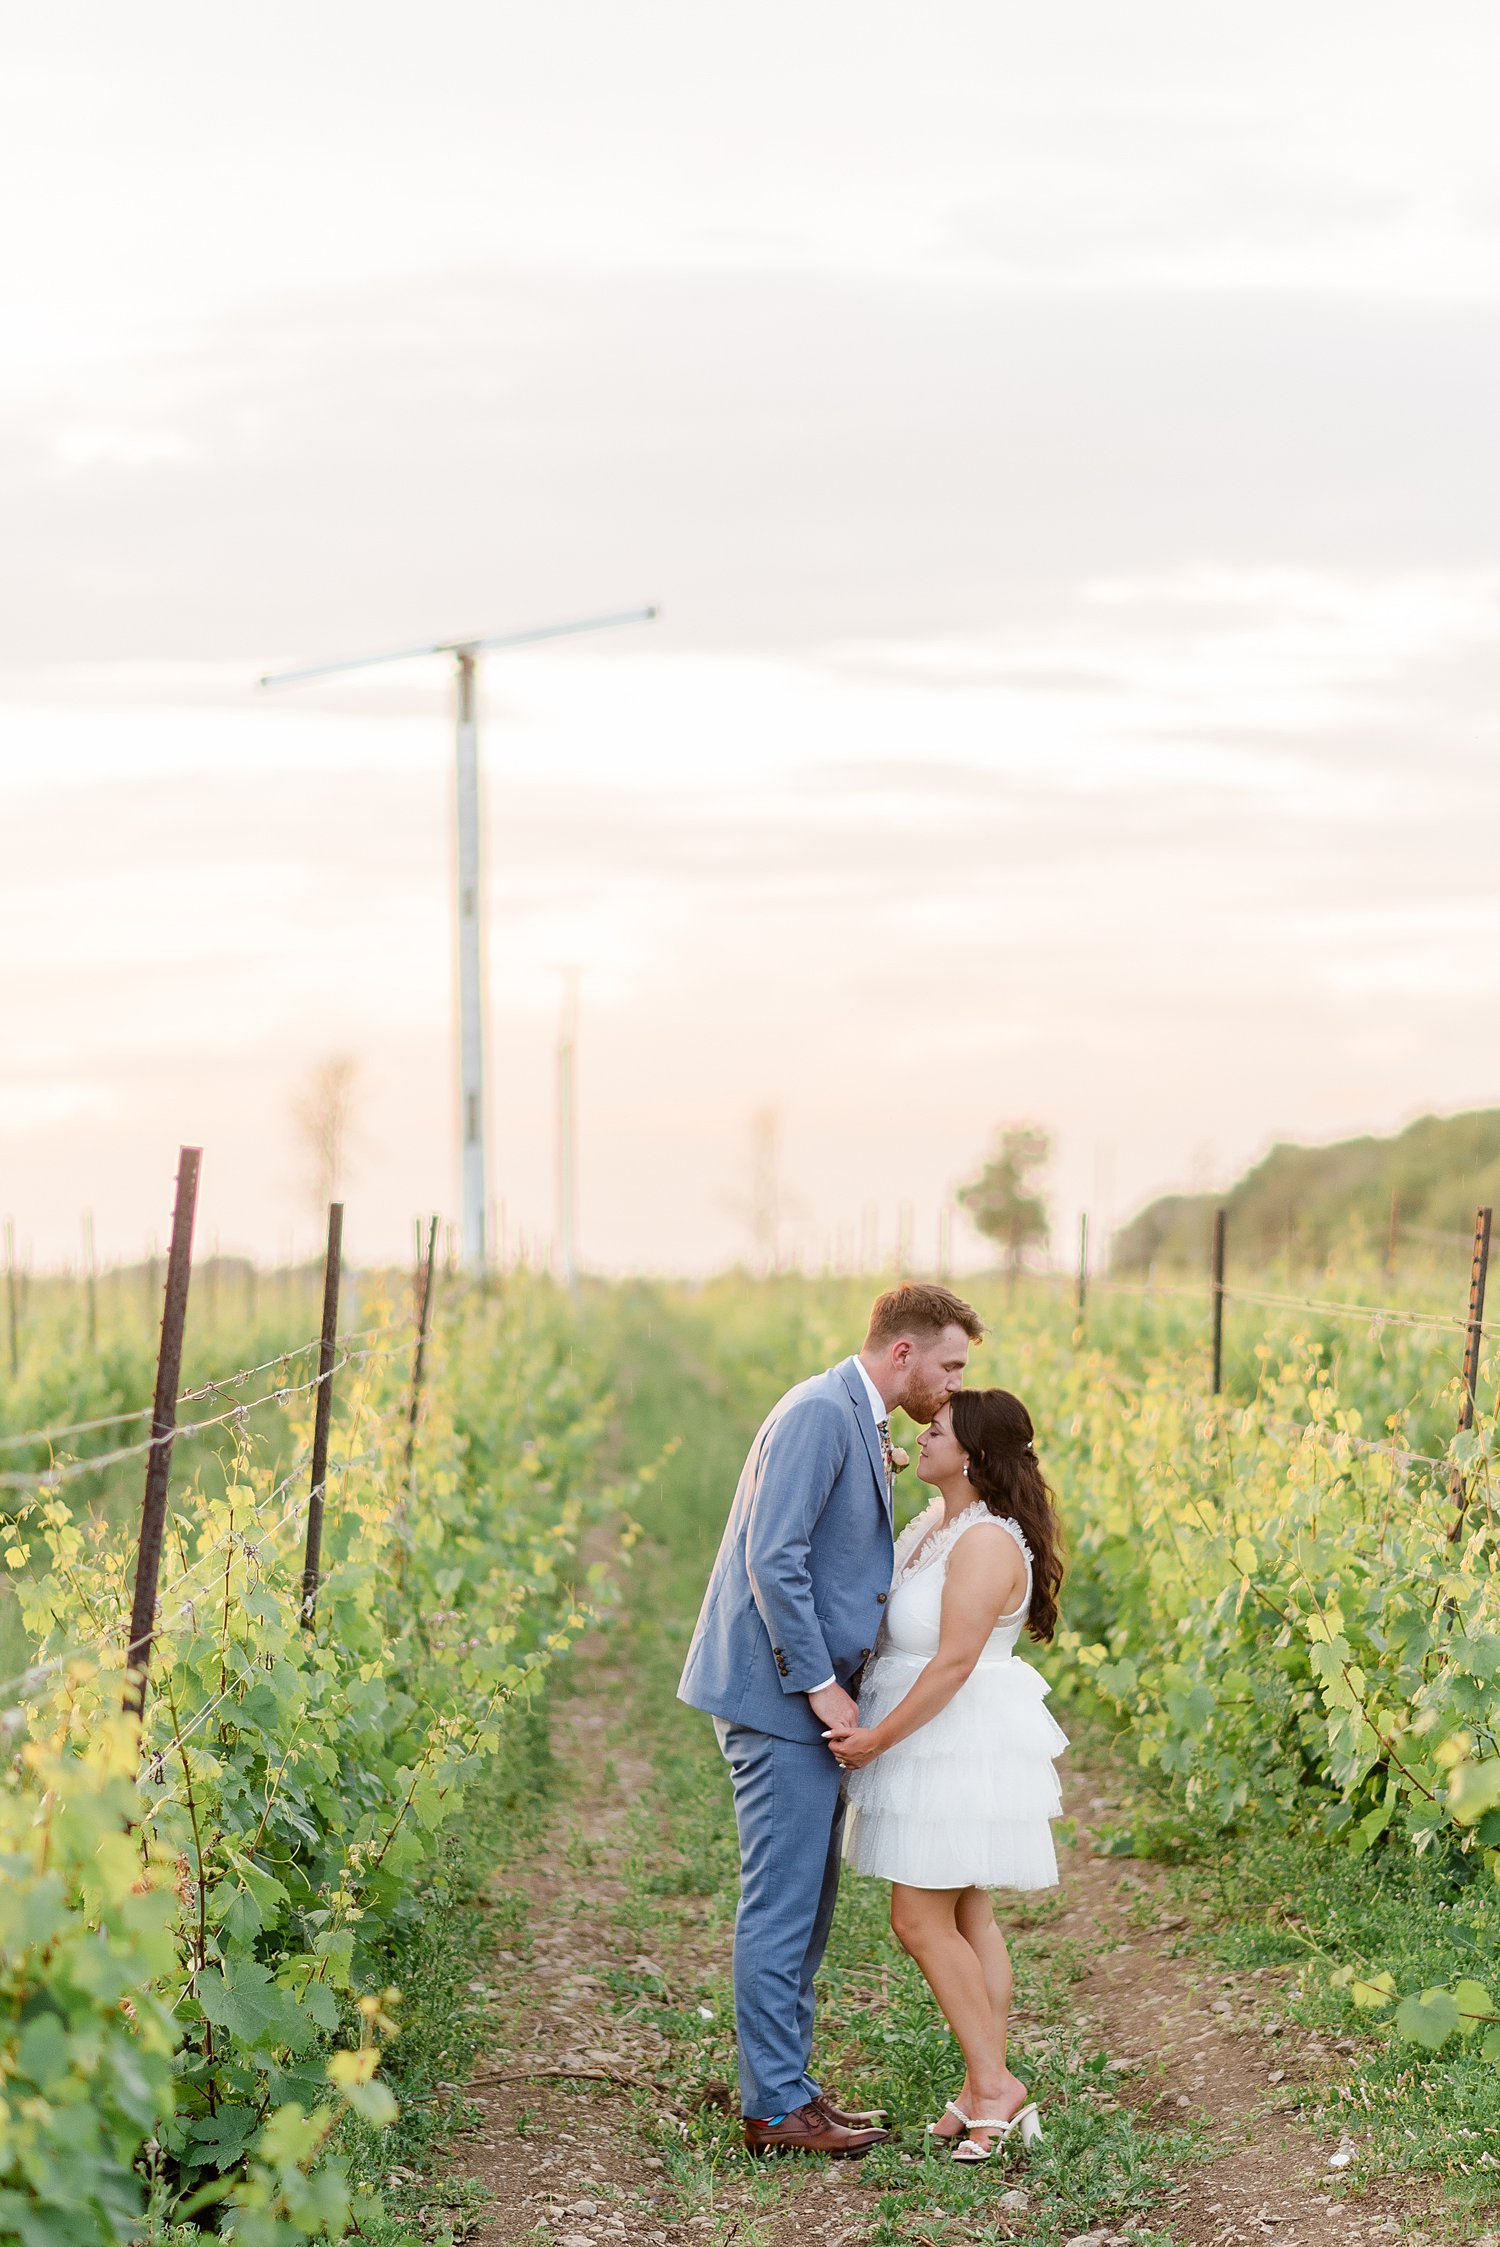 Casa Dea Winery Wedding in Prince Edward County | Prince Edward County Wedding Photographer | Holly McMurter Photographs_0122.jpg